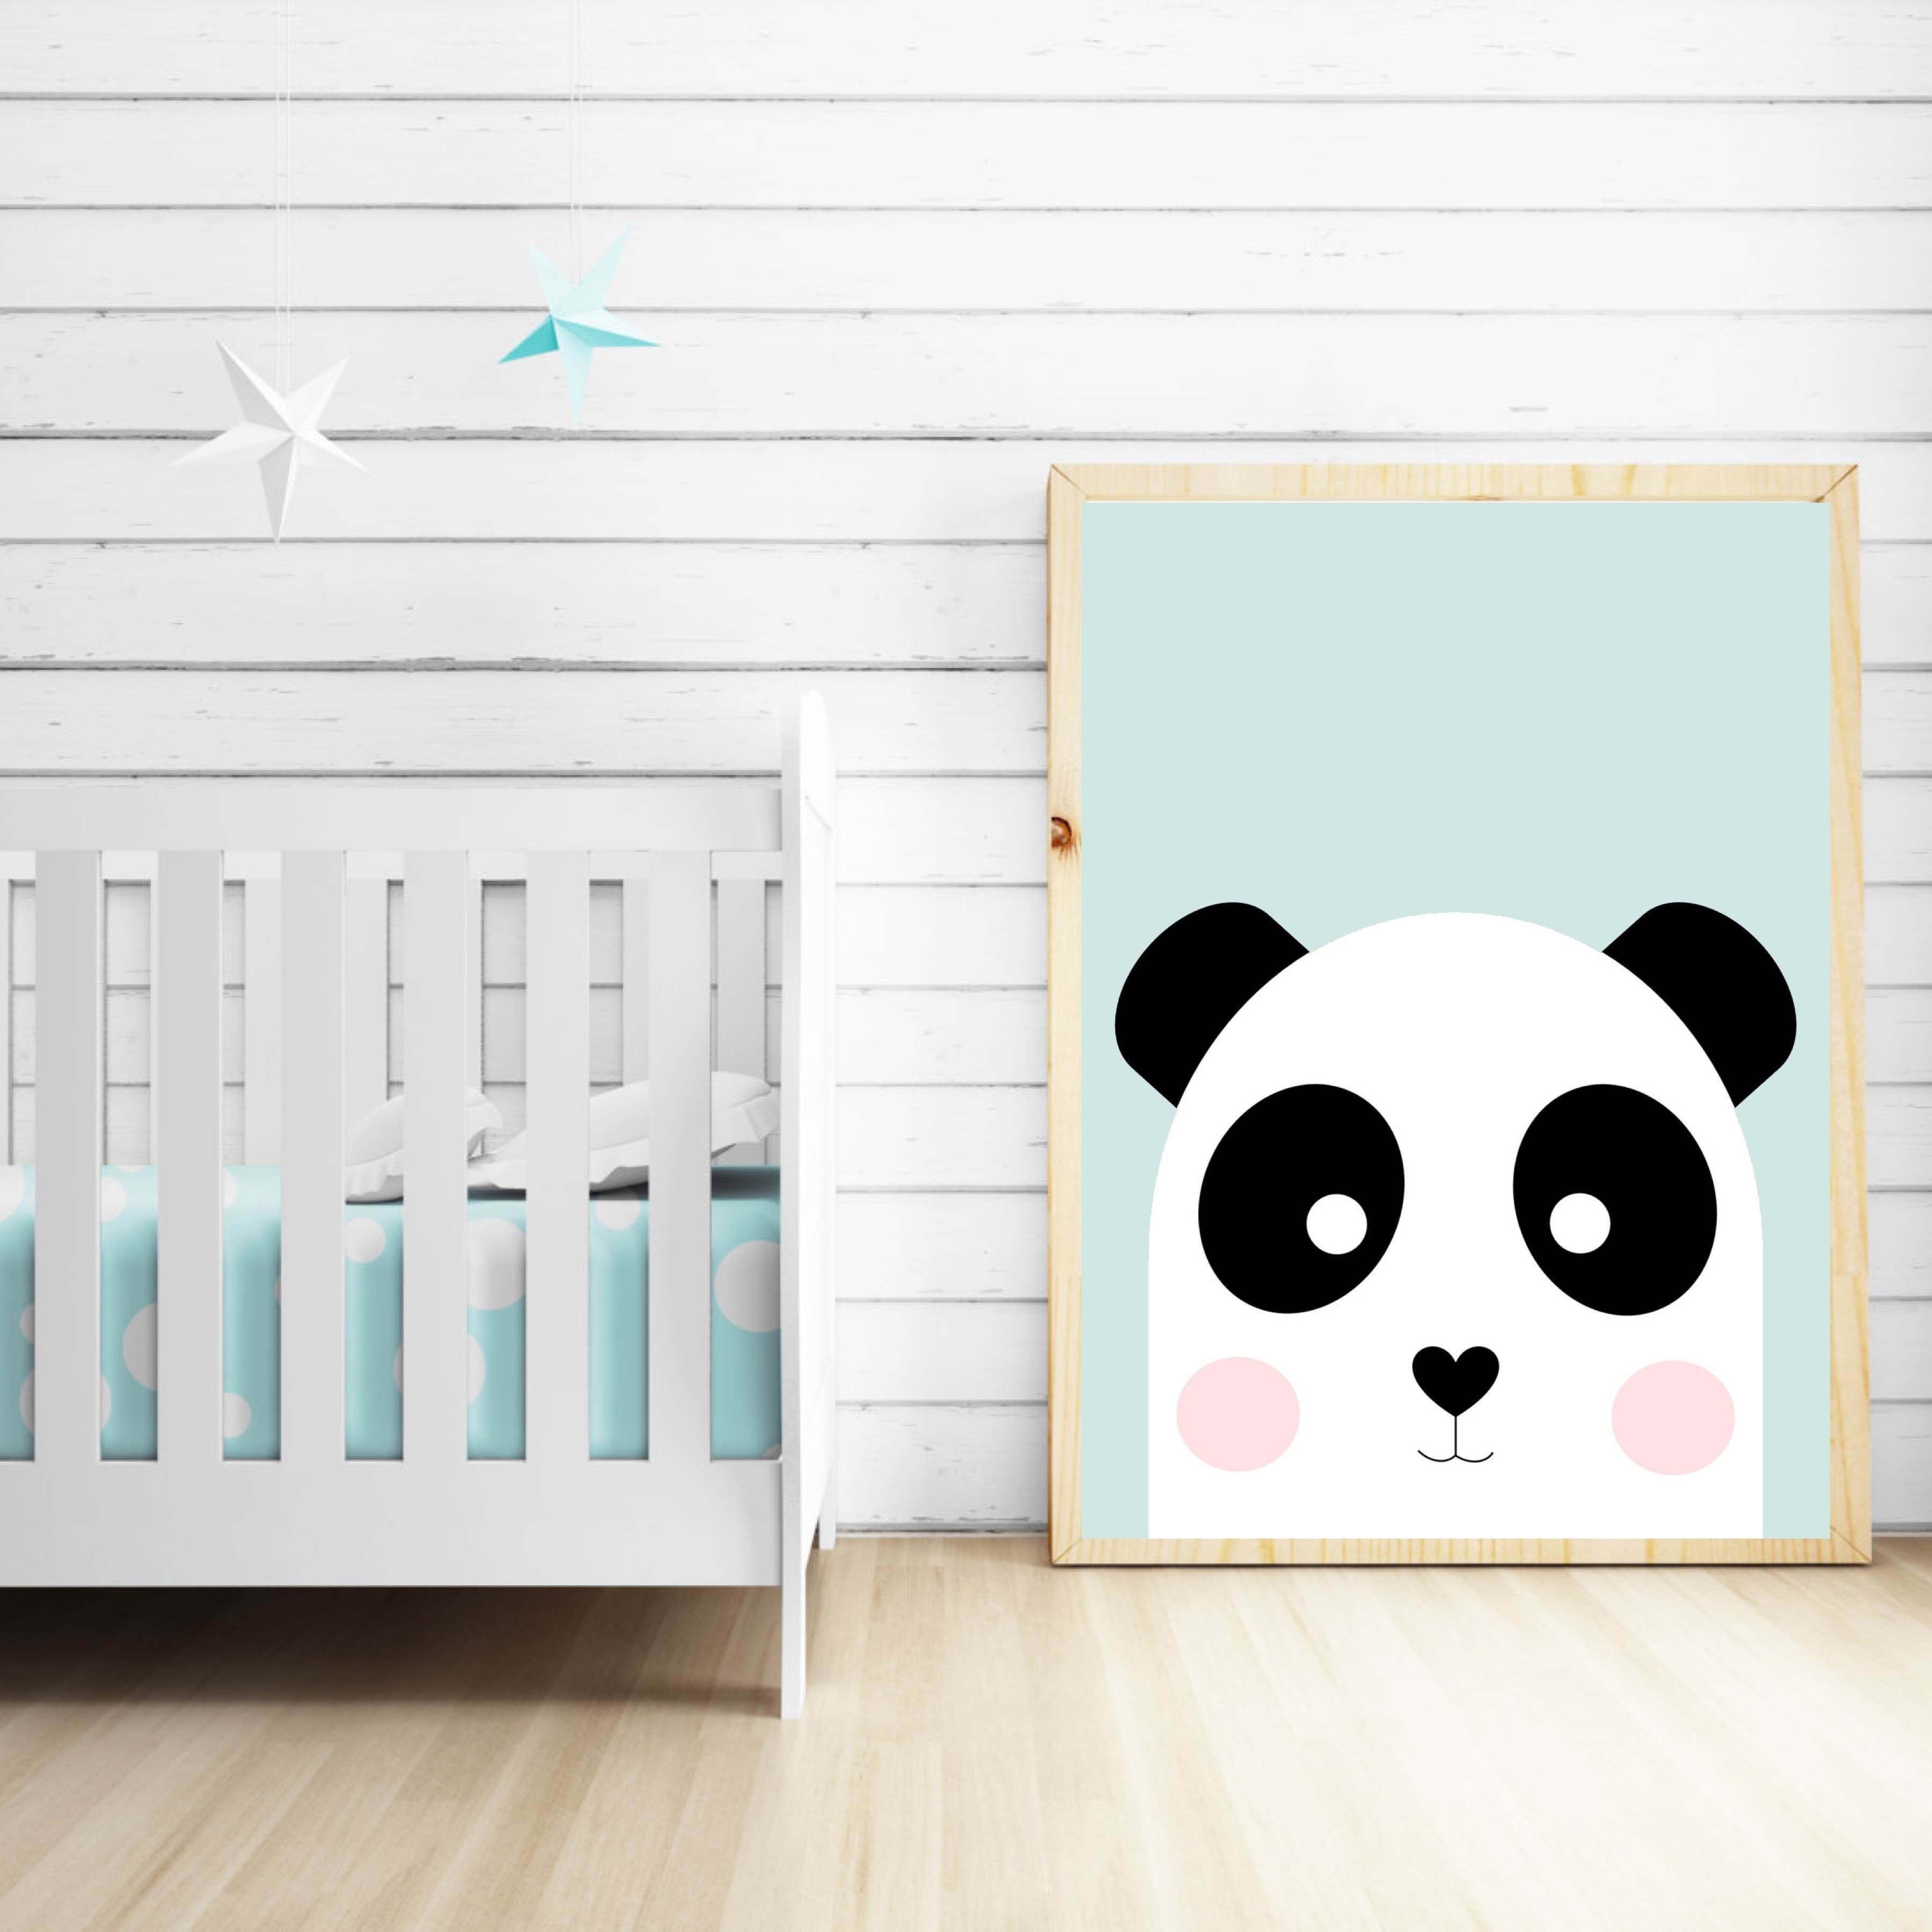 Illustration Kids Art Print, Kids Room Decor, Nursery, Baby, Wall Pertaining To Baby Wall Art (View 15 of 20)